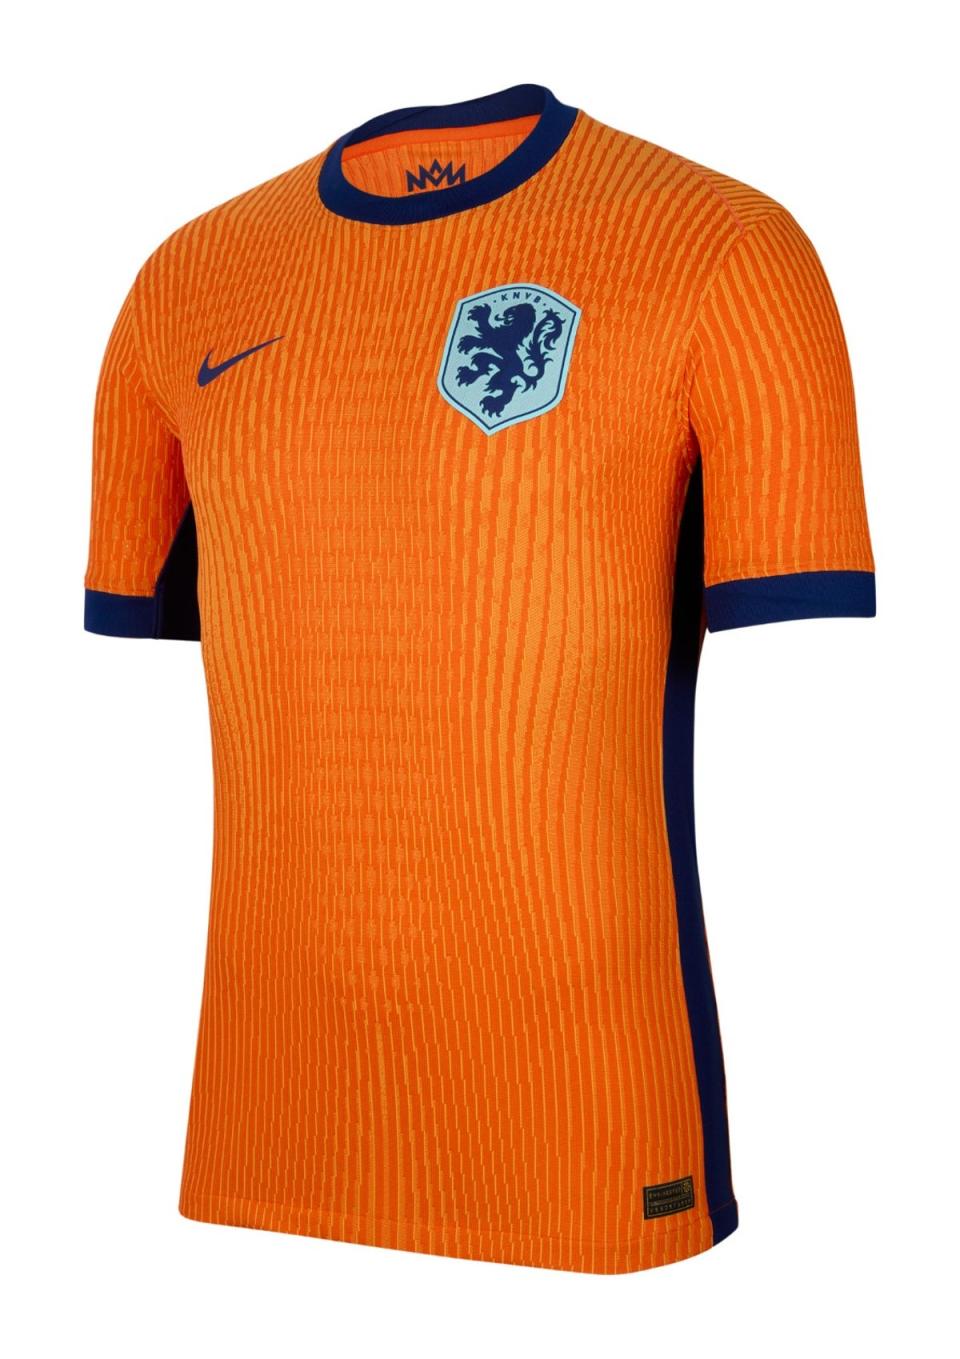 Netherlands at home (Nike)